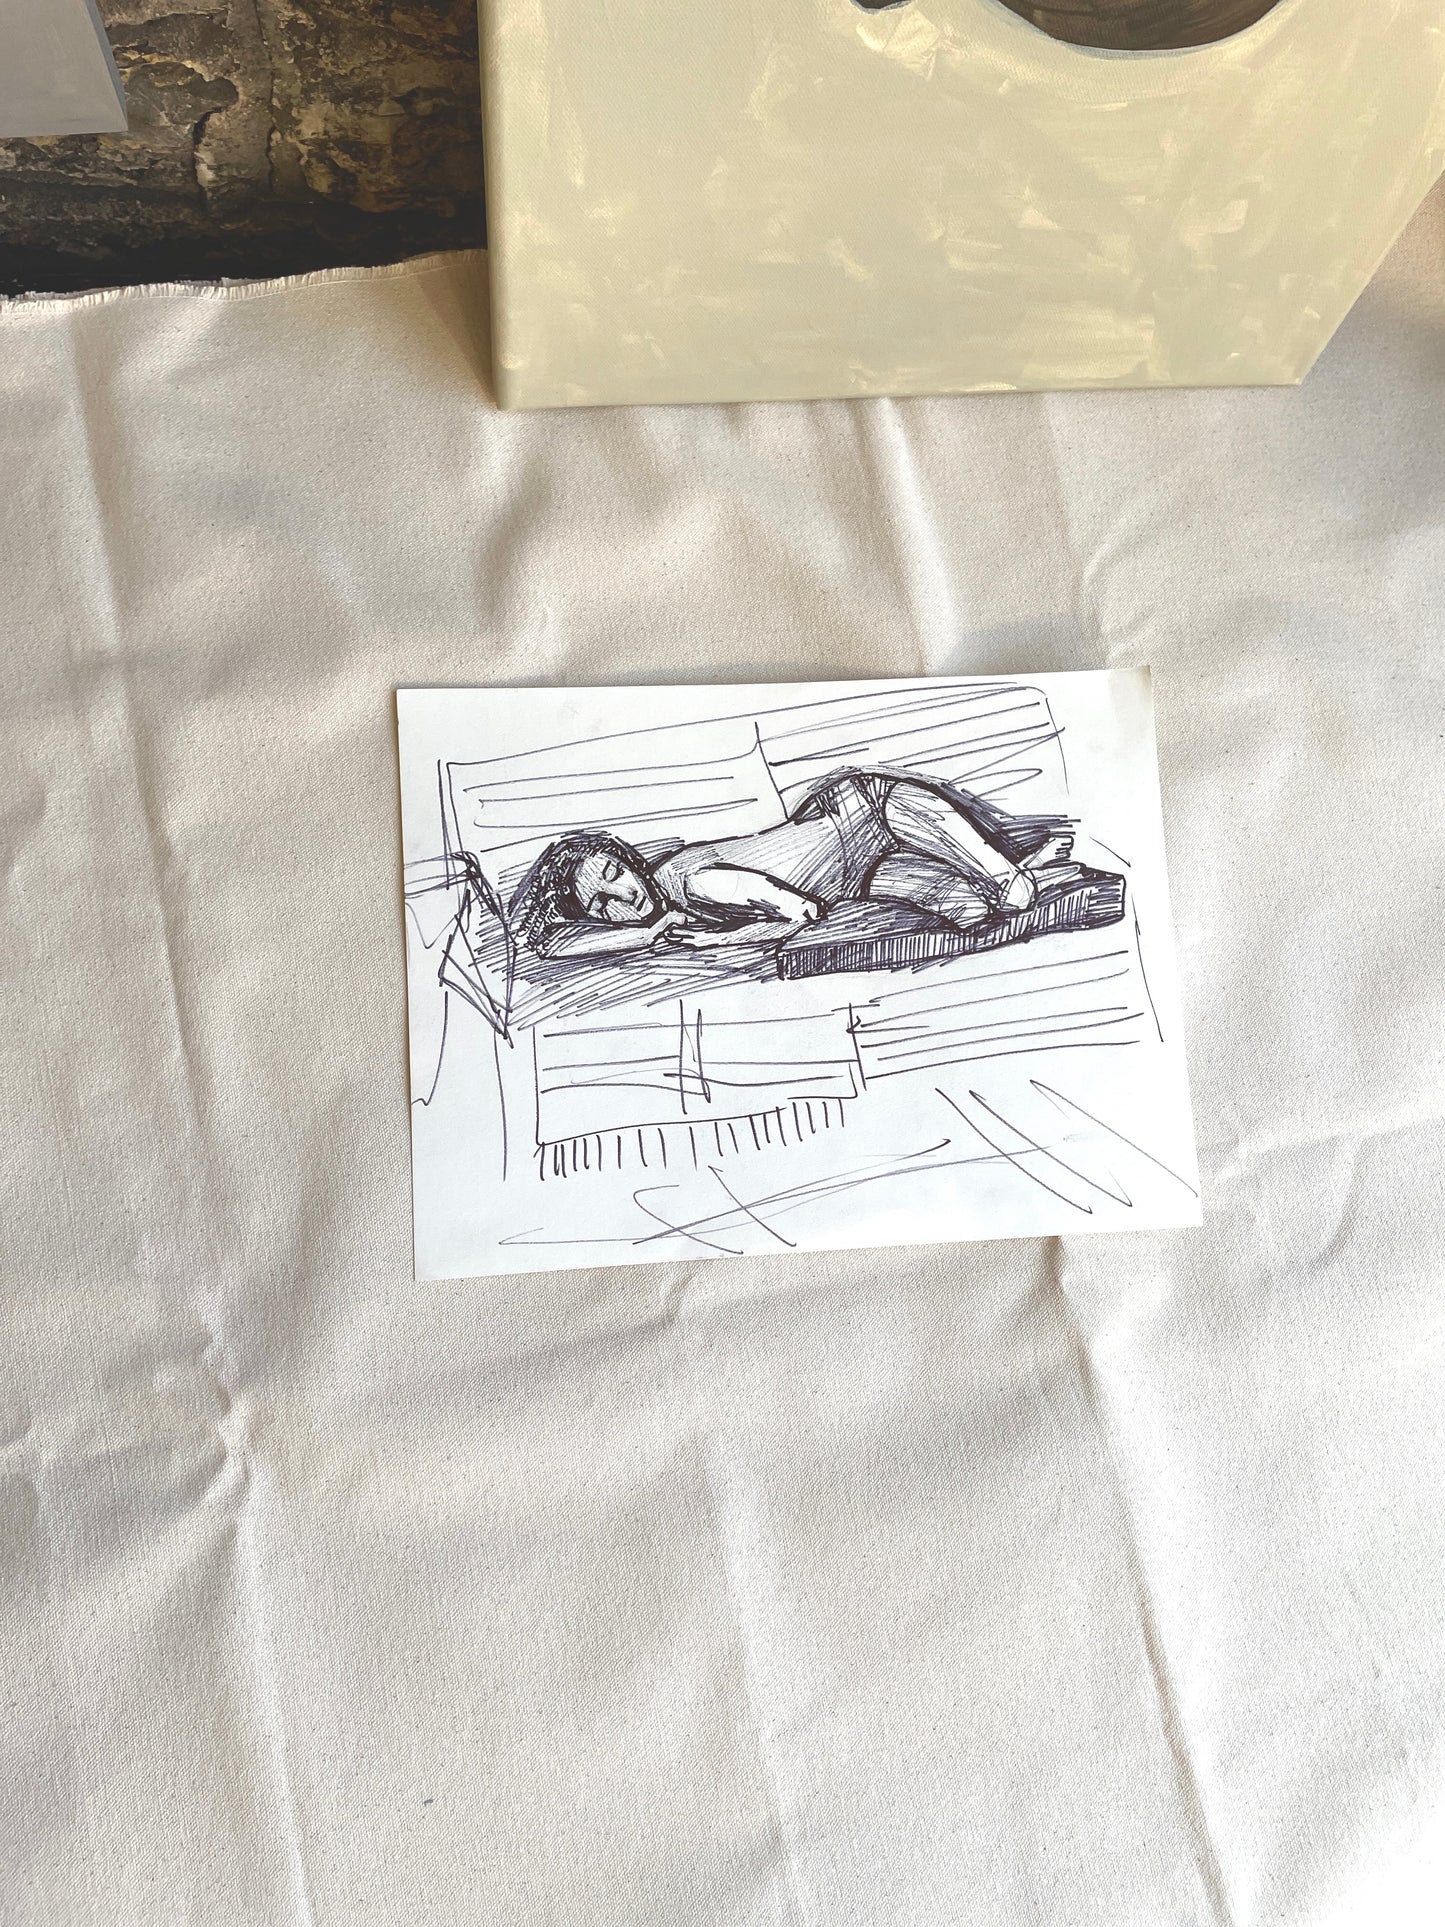 Black marker sketch of a woman sleeping